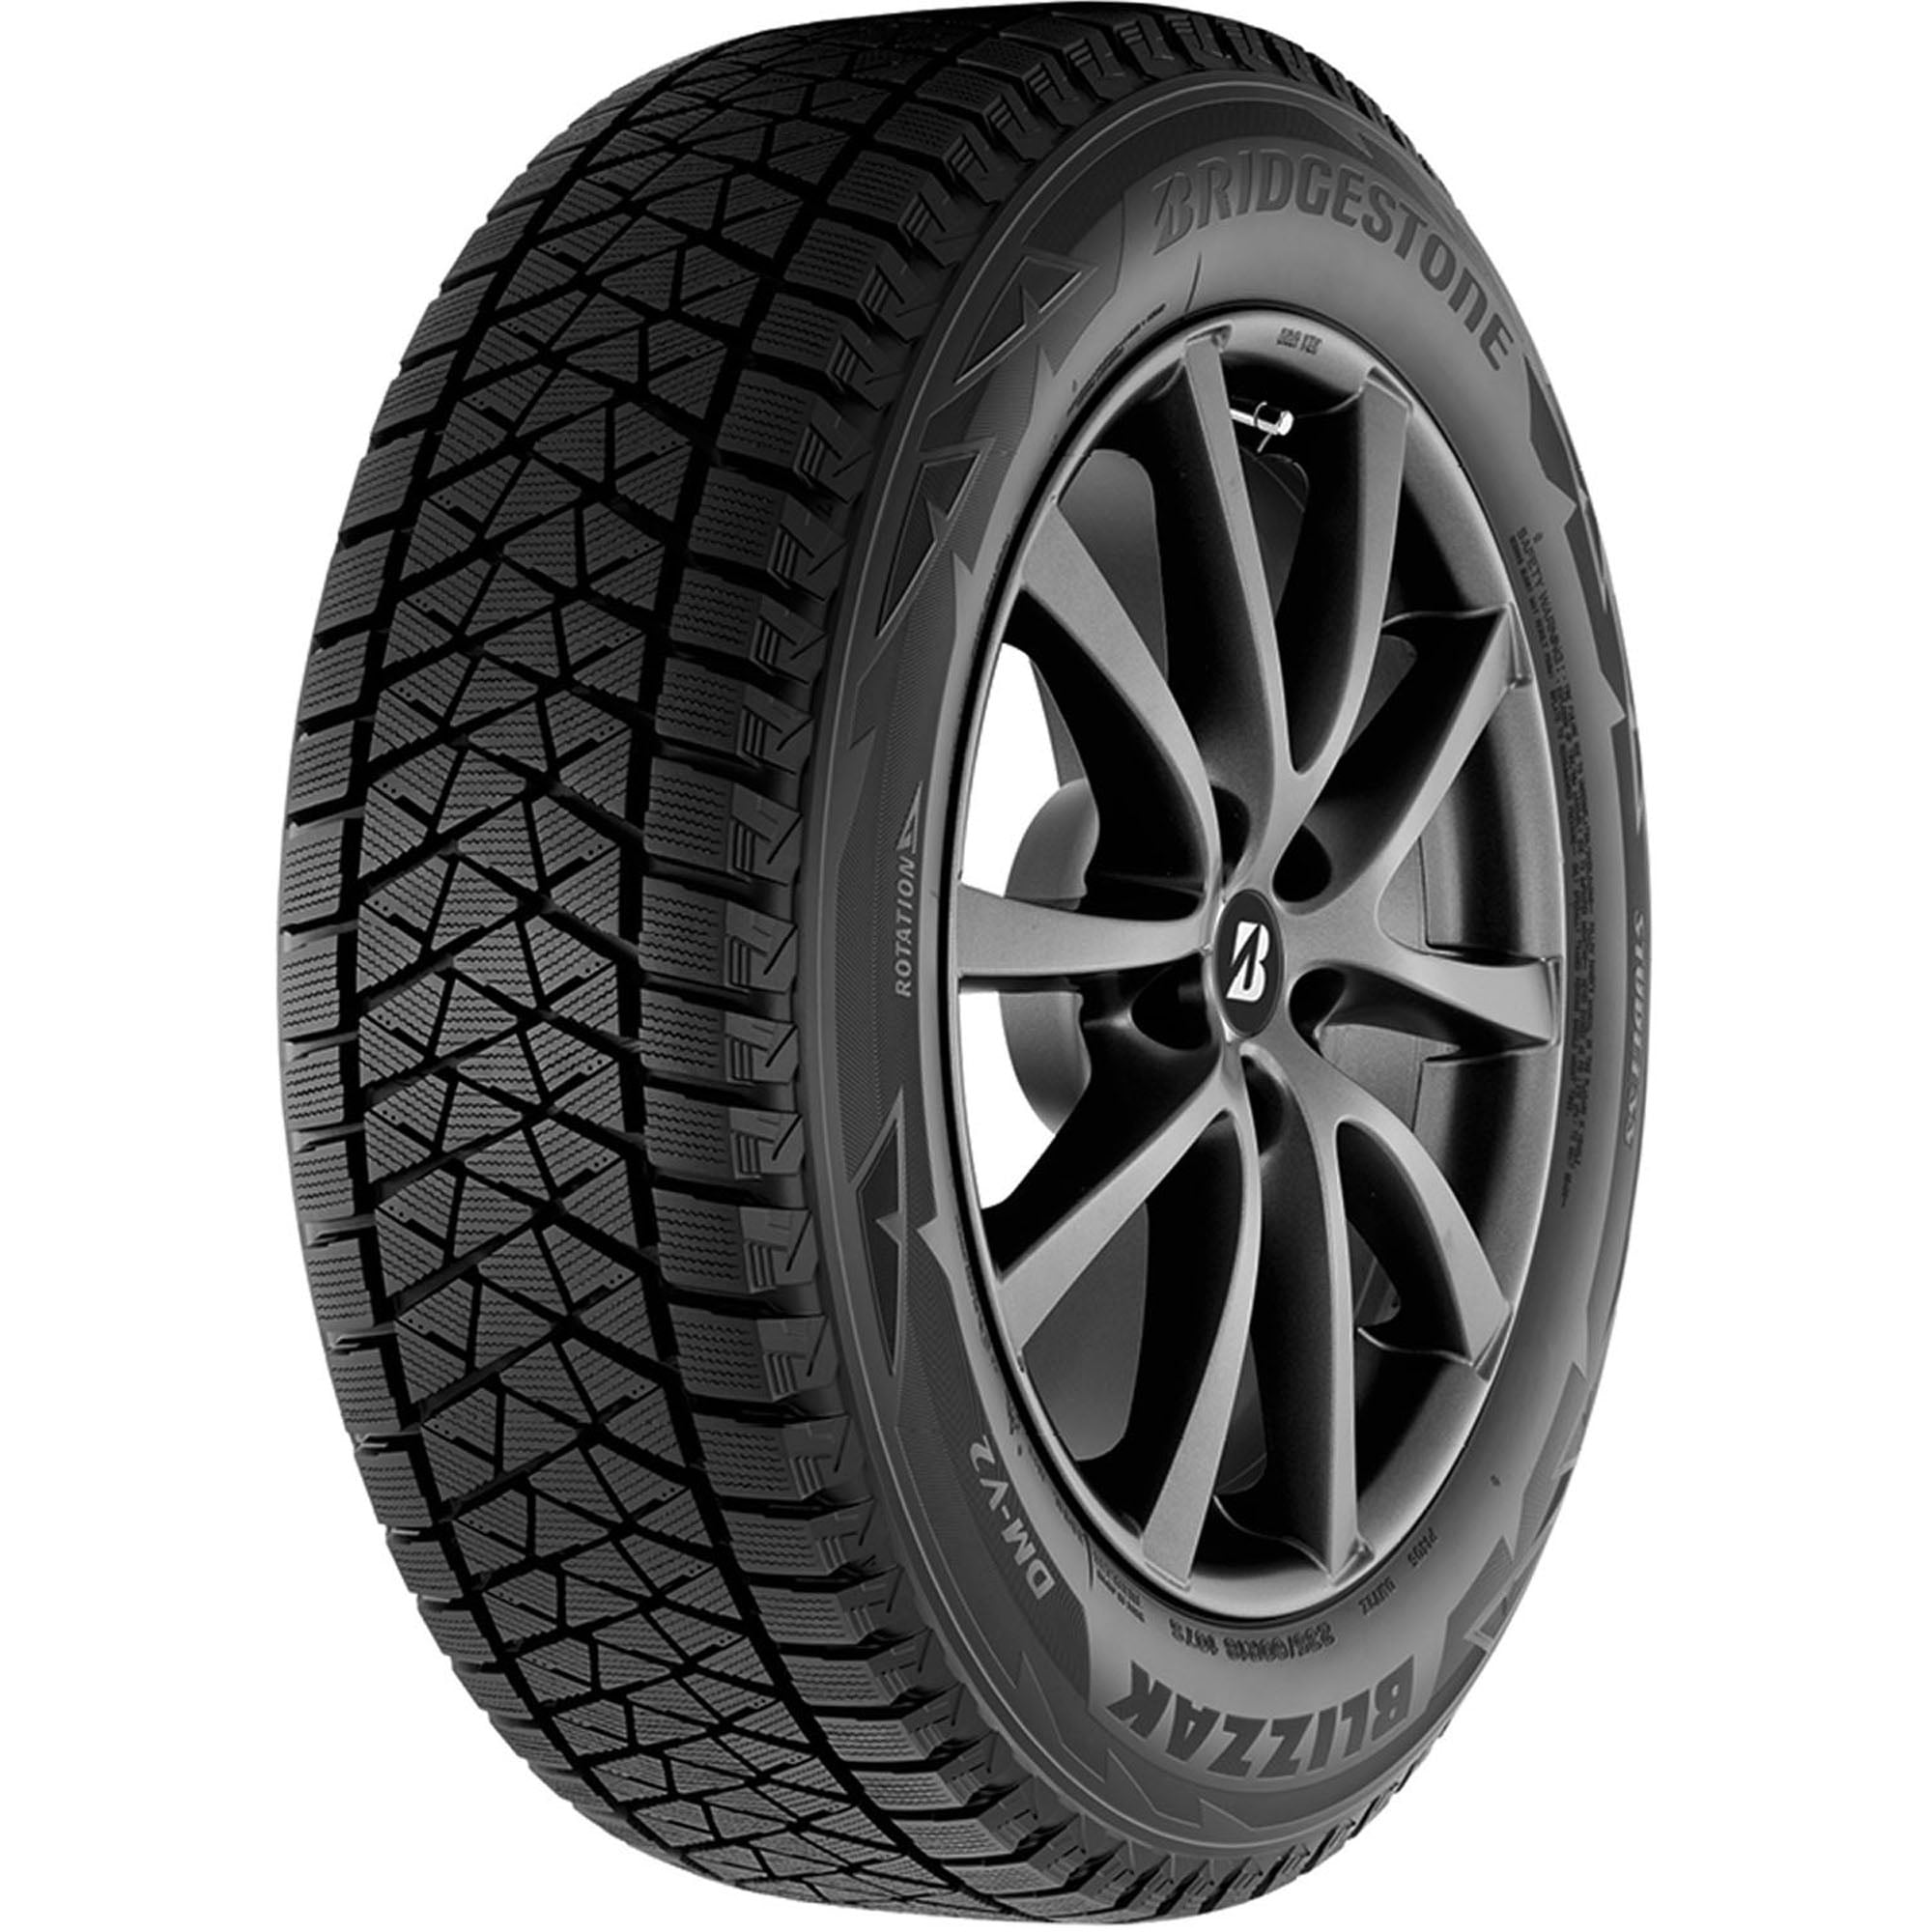 Bridgestone Blizzak DM-V2 Winter 235/65R17 108S XL Light Truck Tire